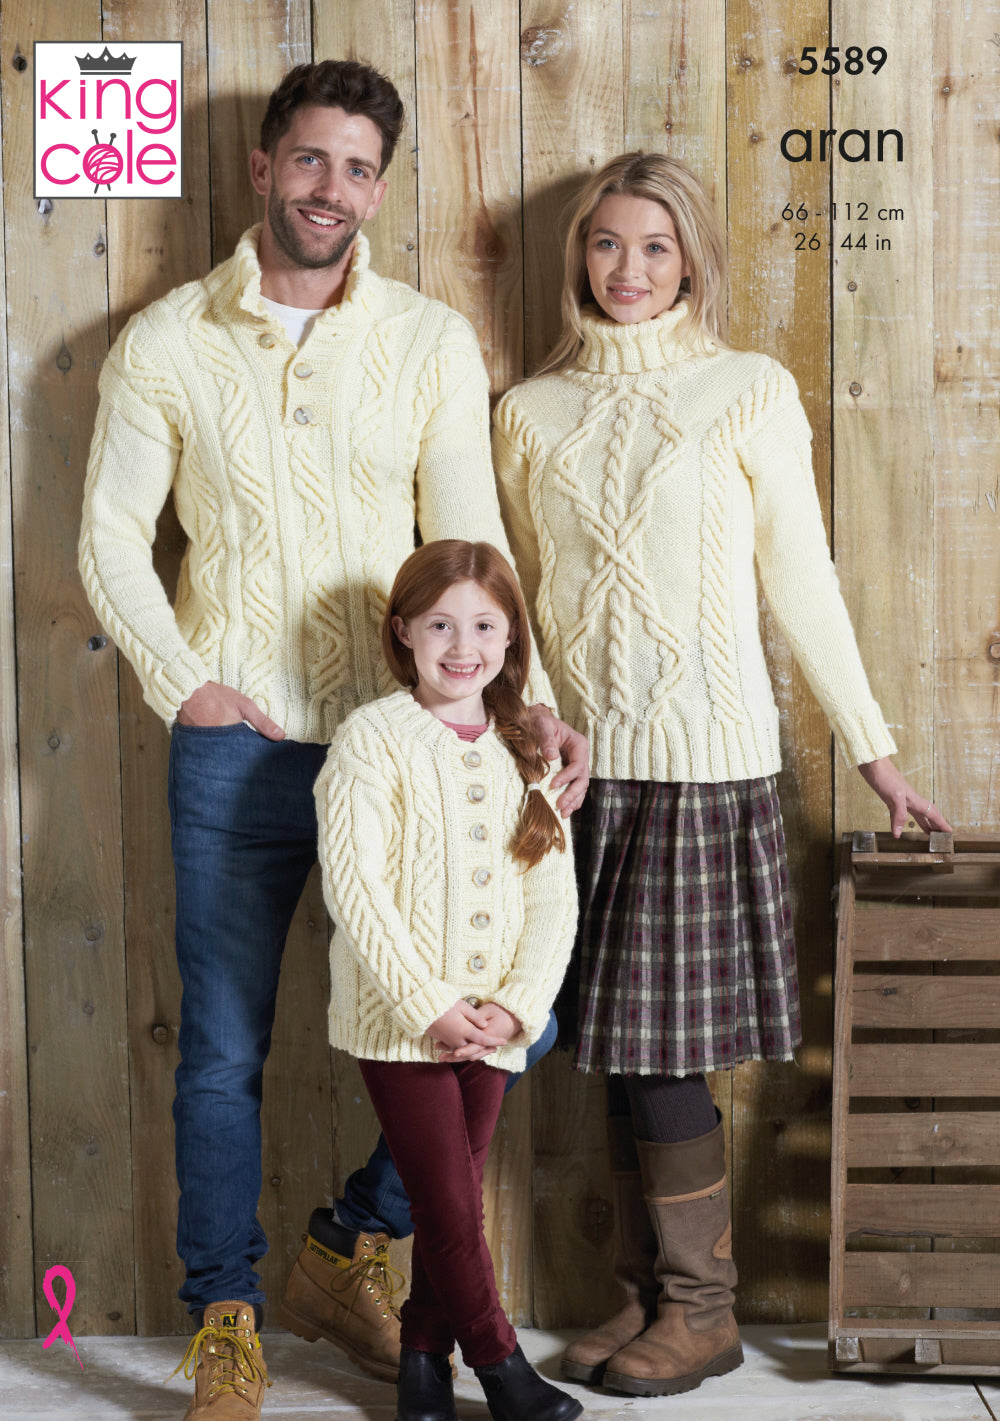 King Cole 5859 Family Aran Sweater Cardigan Knitting Pattern